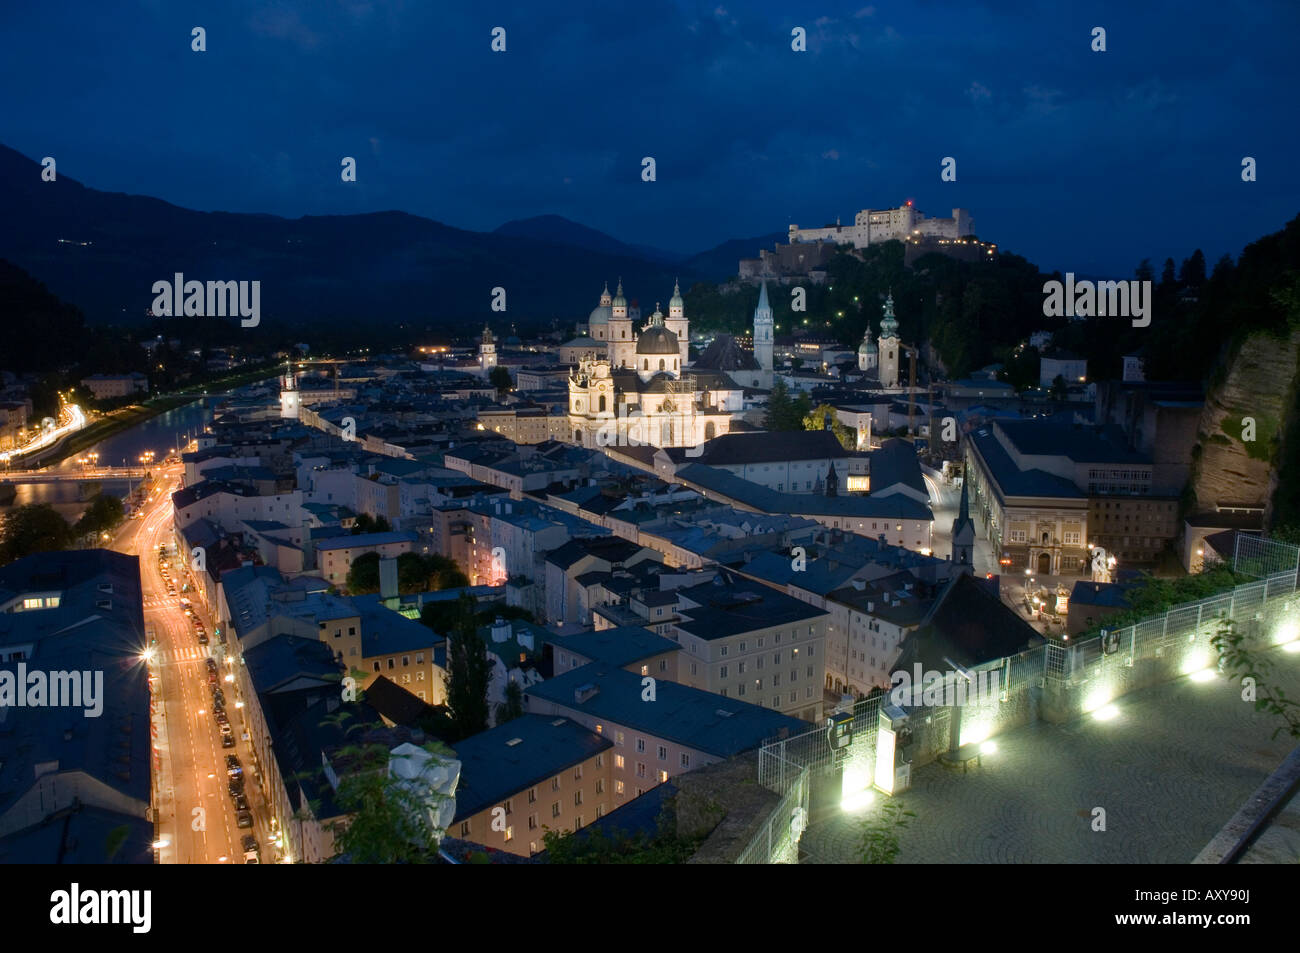 Cityscape showing Schloss Hohensalzburg, dusk, Saltzburg, Austria Stock Photo